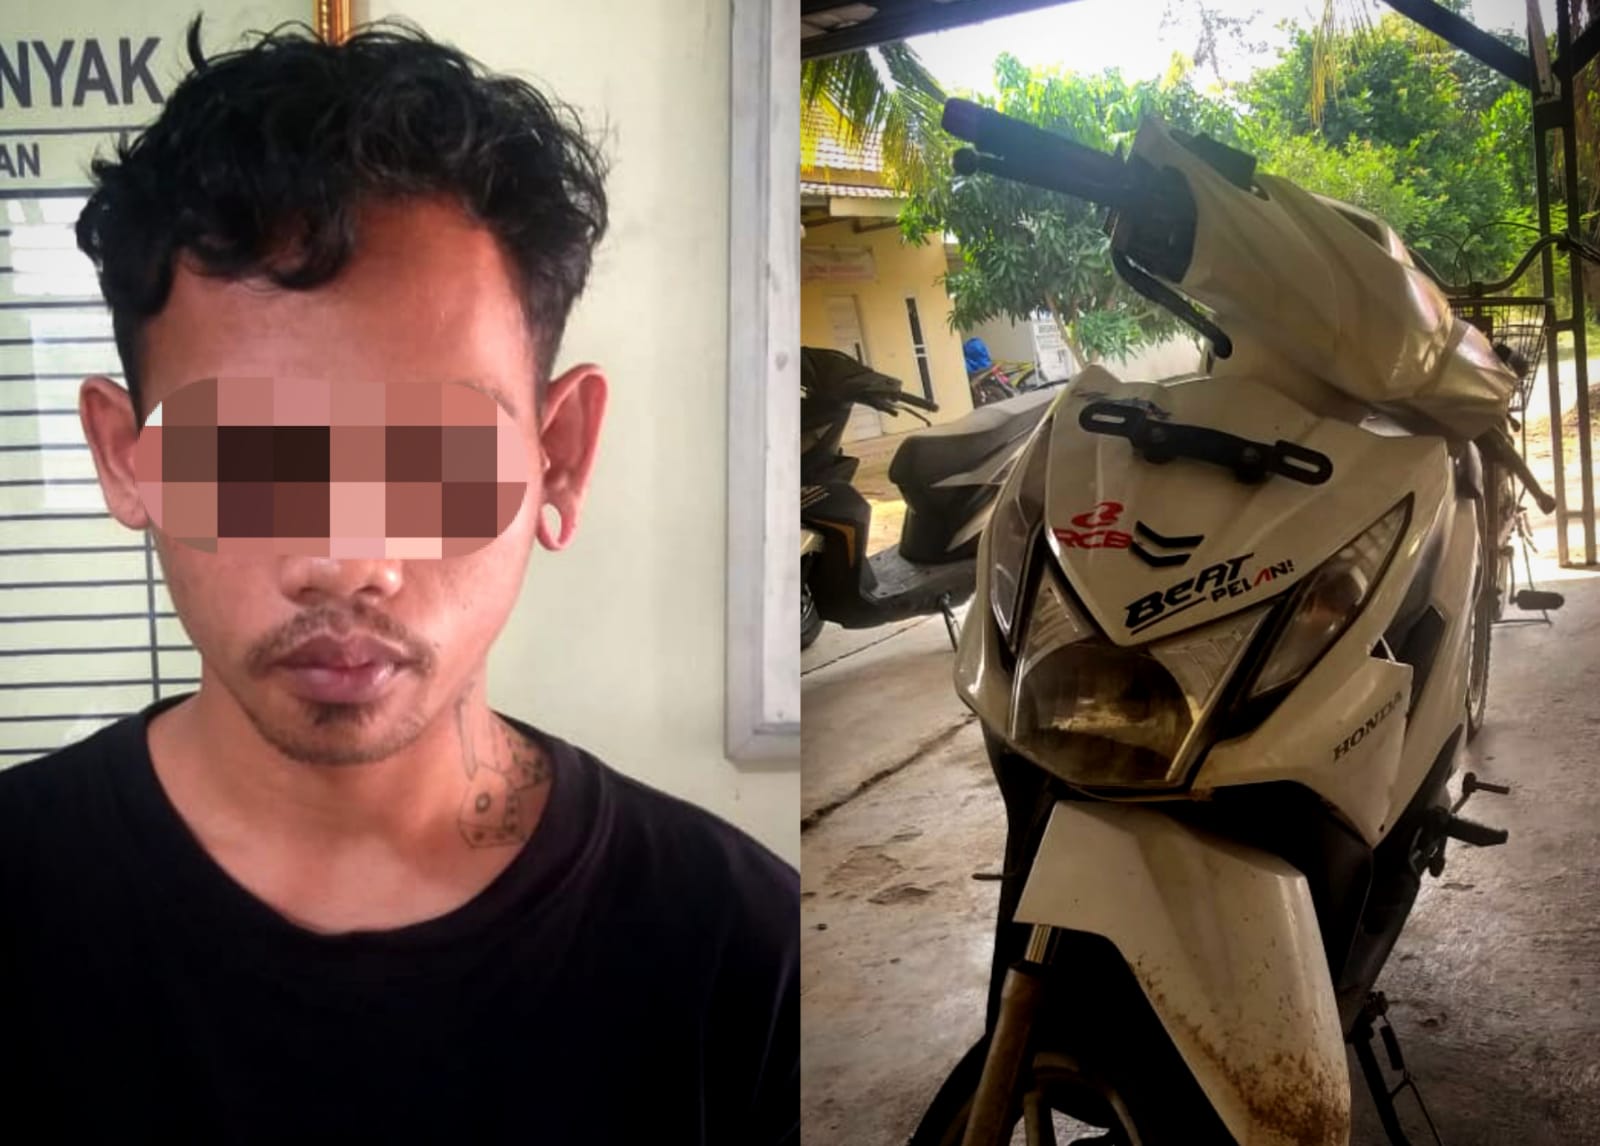 Seorang buruh giling daging nekat membawa kabur dan gadaikan sepeda motor milik bosnya berhasil ditangkap  Tim Tekab 308 Presisi Polsek Seputih Banyak, Polres Lampung Tengah, Polda Lampung., pada Jumat (14/7/23) pukul 22.00 WIB.